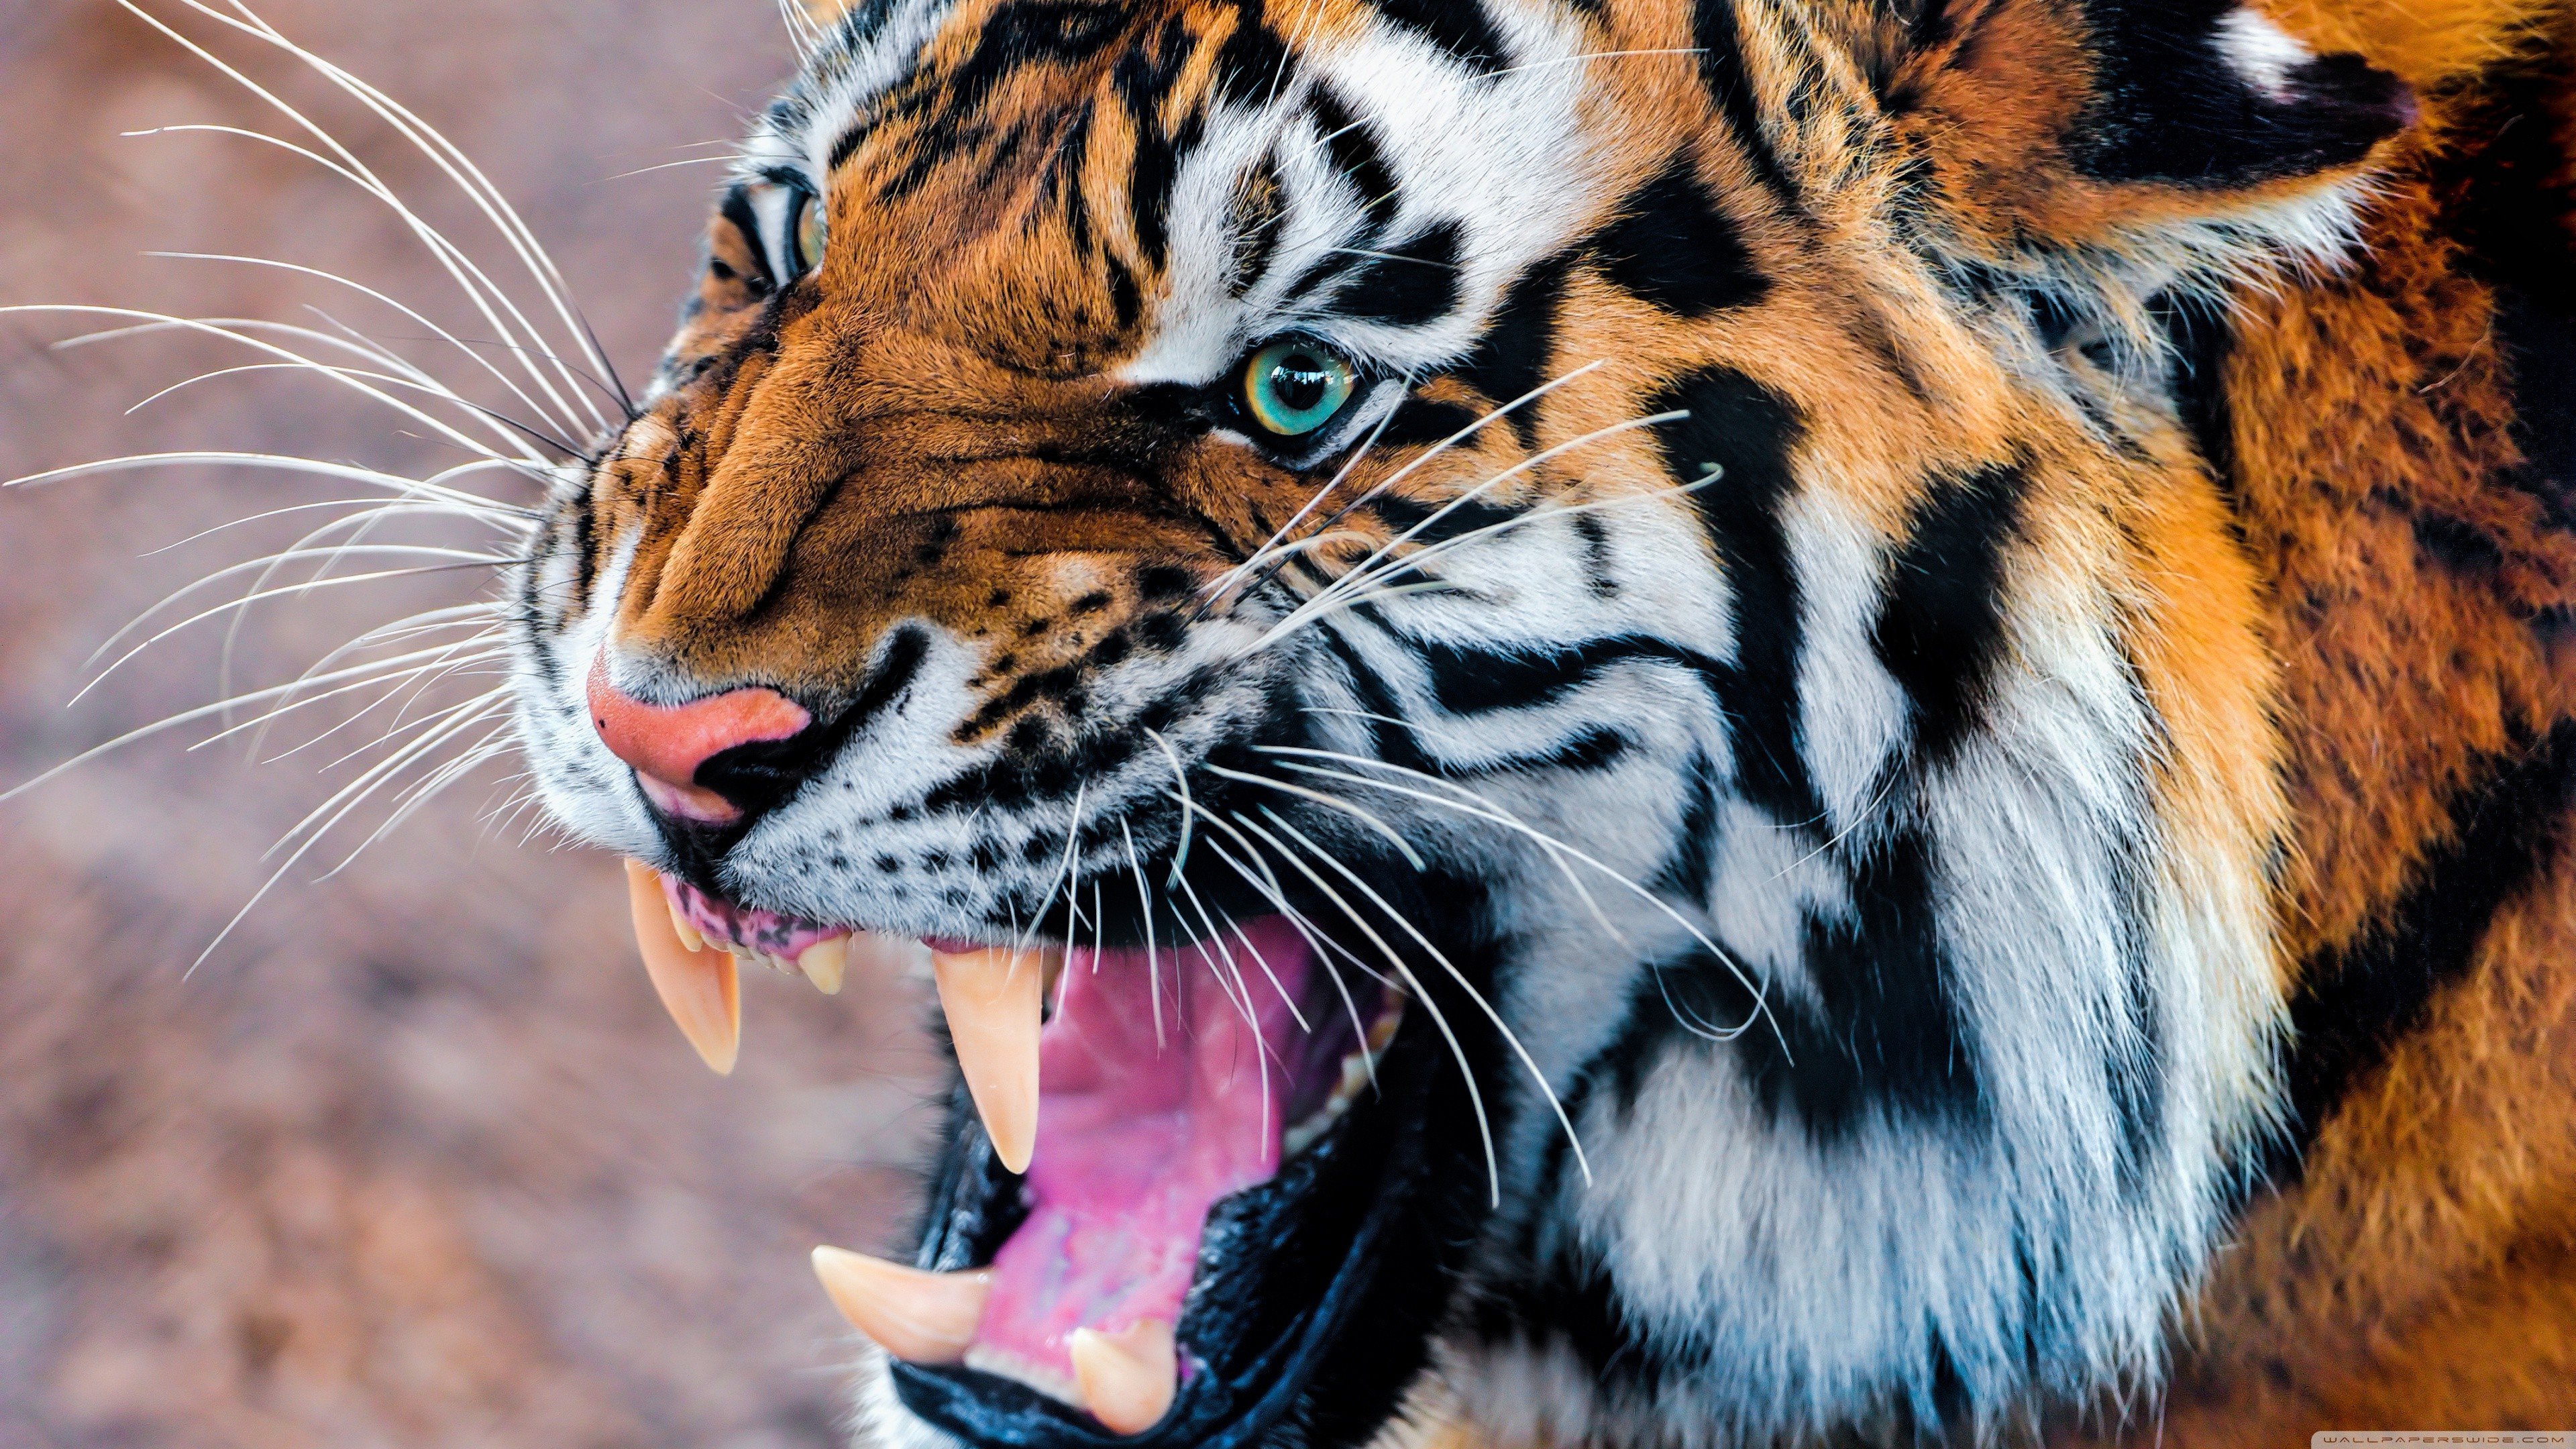 General 3840x2160 animals tiger roar big cats mammals animal eyes teeth feline fangs nature